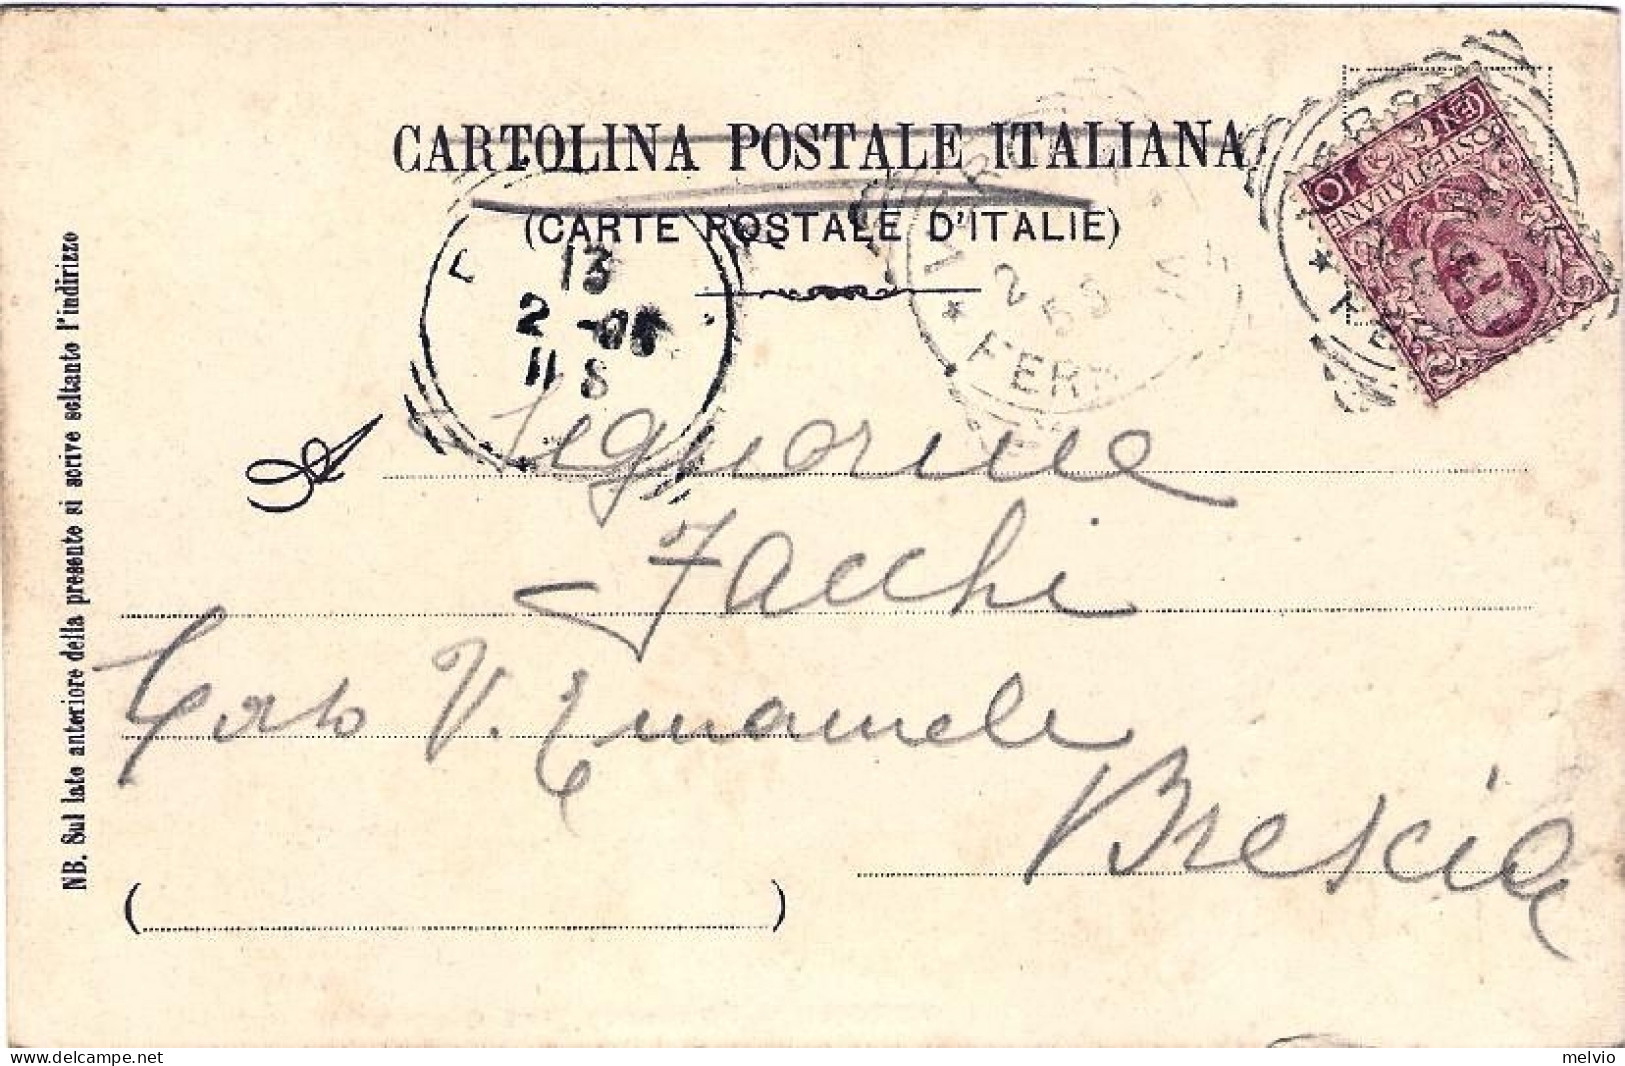 1905-cartolina Di Verona Palazzo Fra Giocondo Viaggiata - Verona